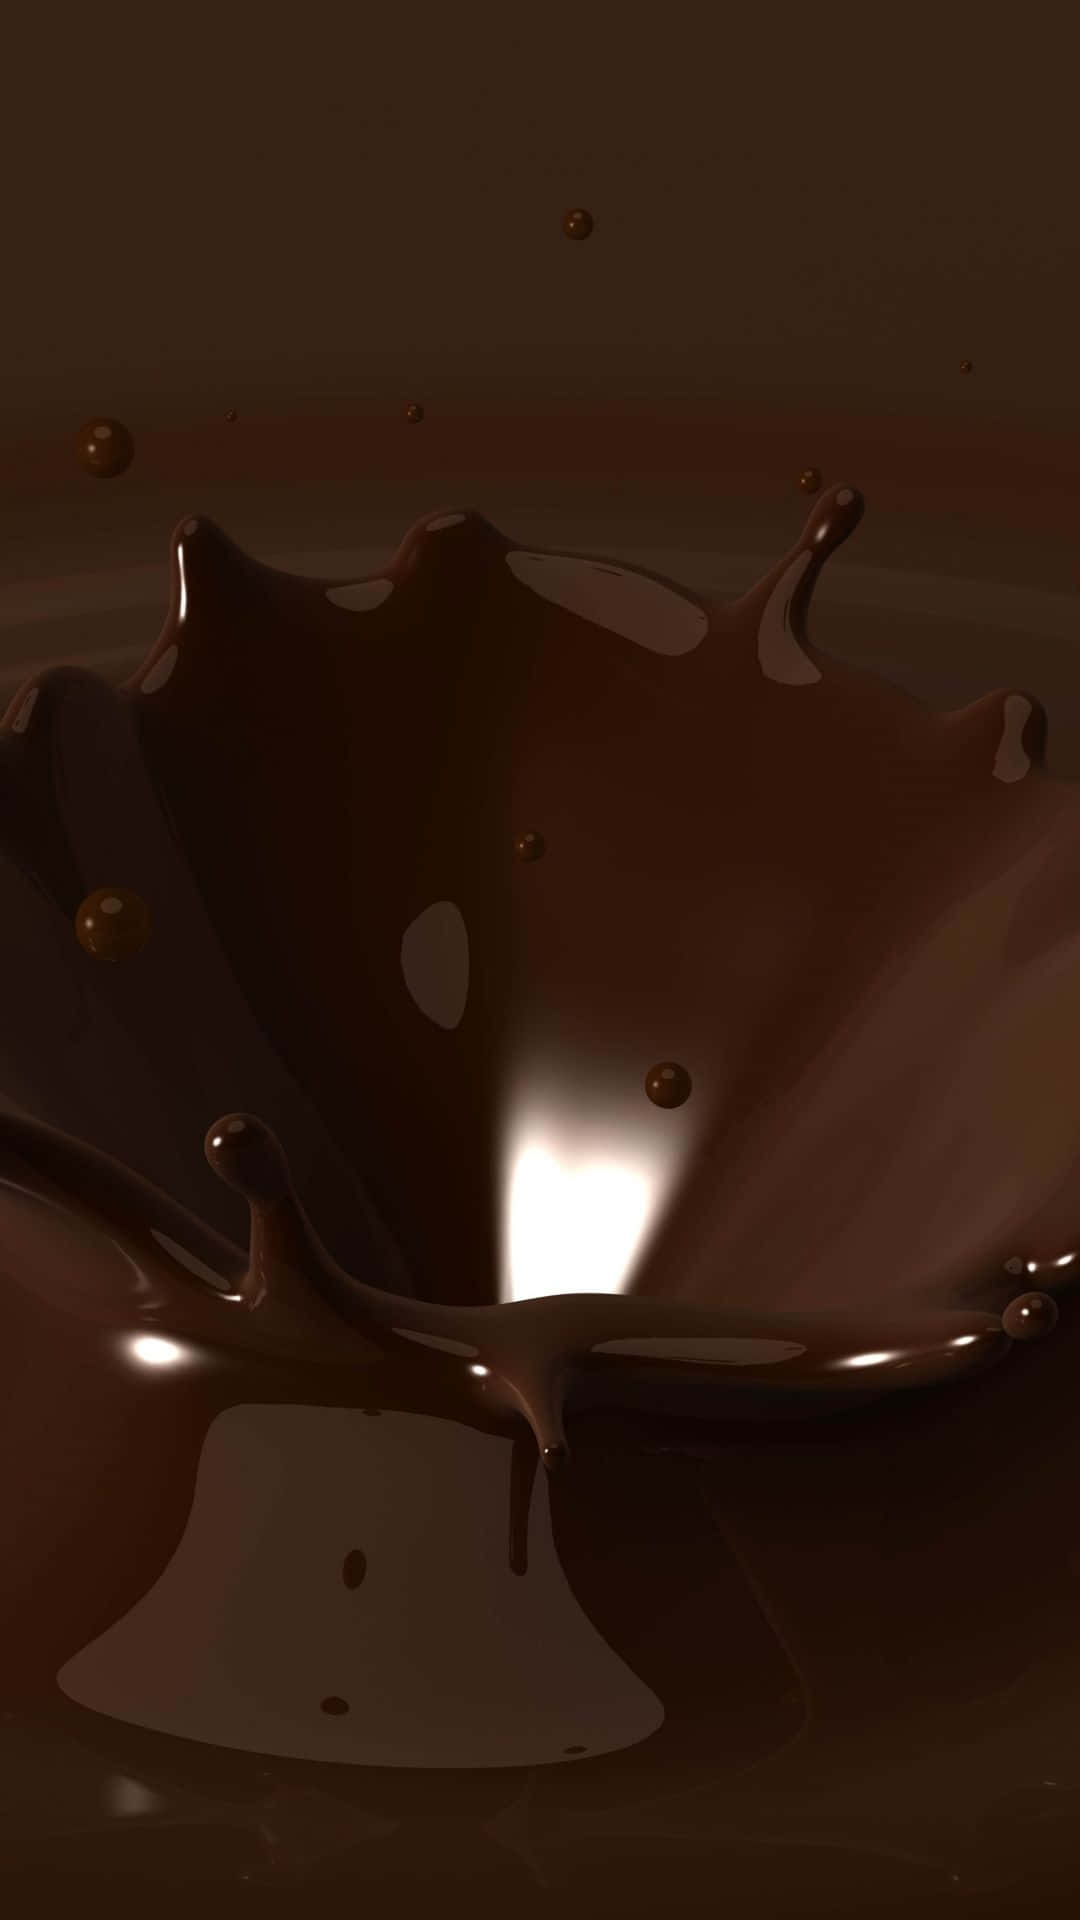 Dark Chocolate Delight Wallpaper